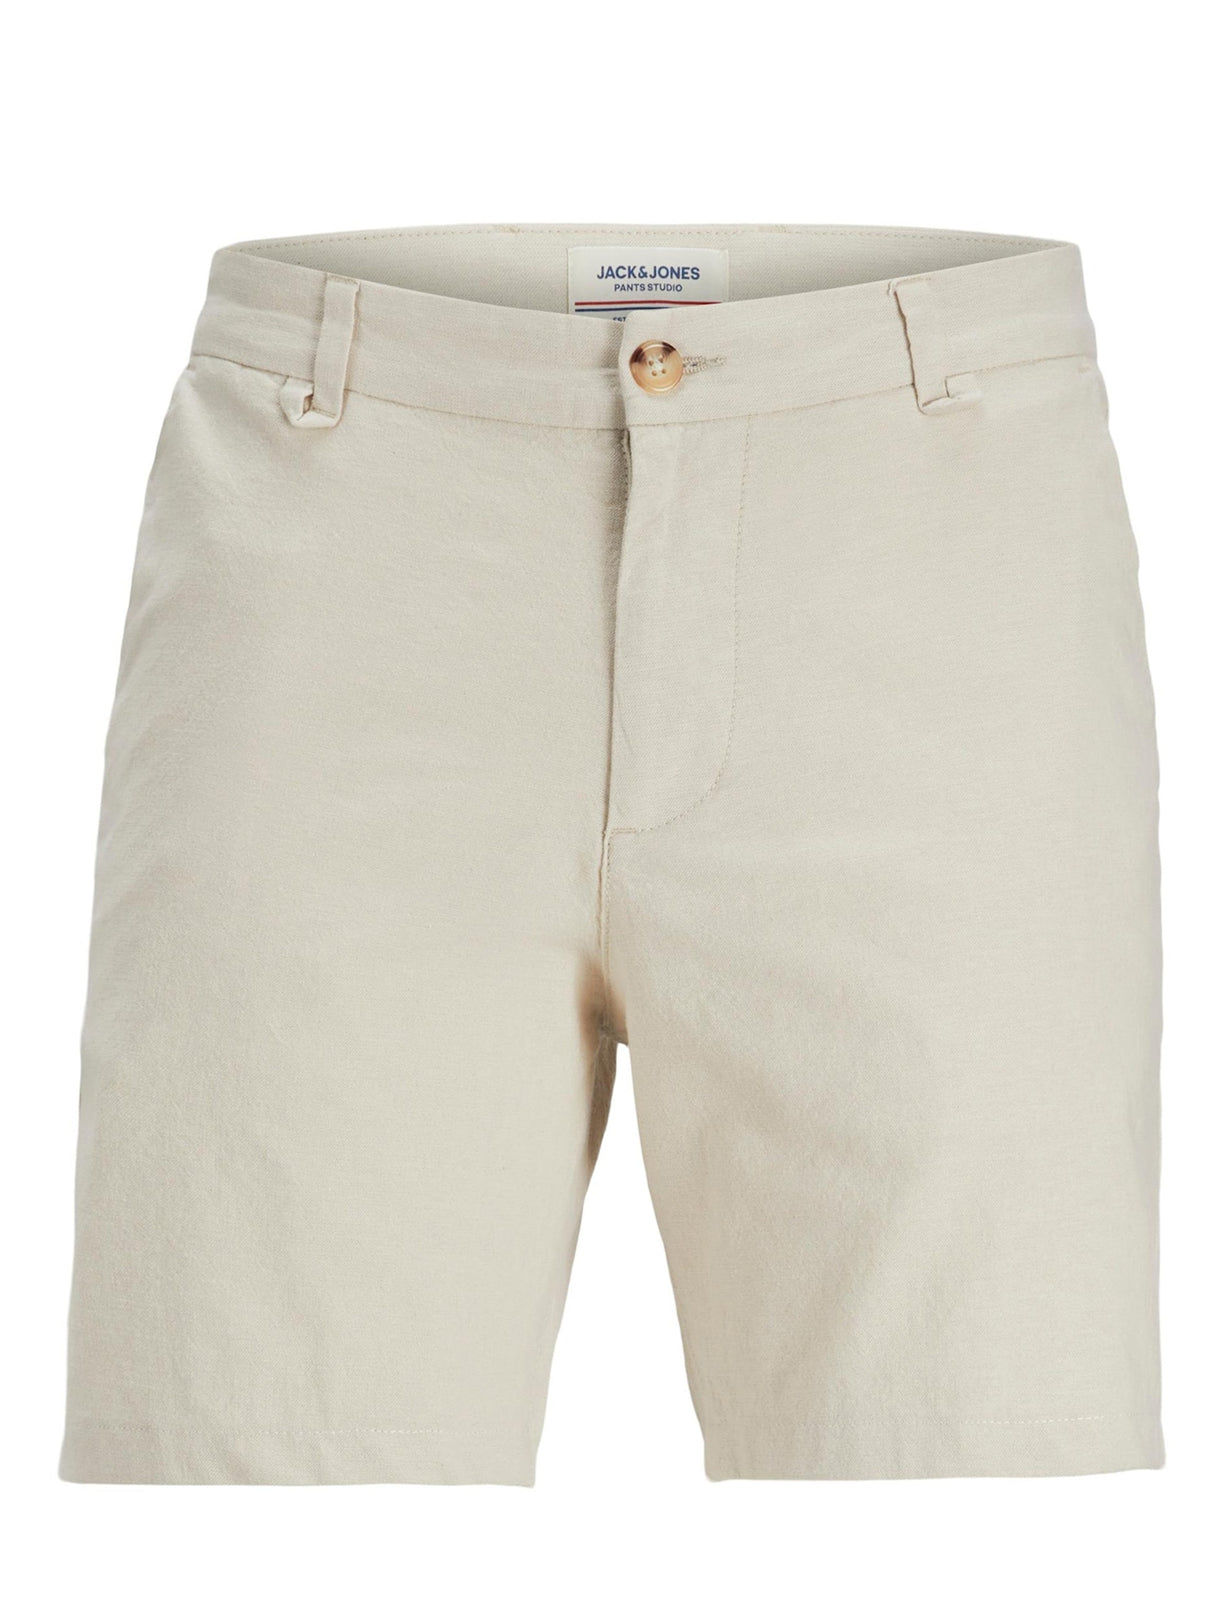 Image for Men's Plain Solid Linen Short,Beige